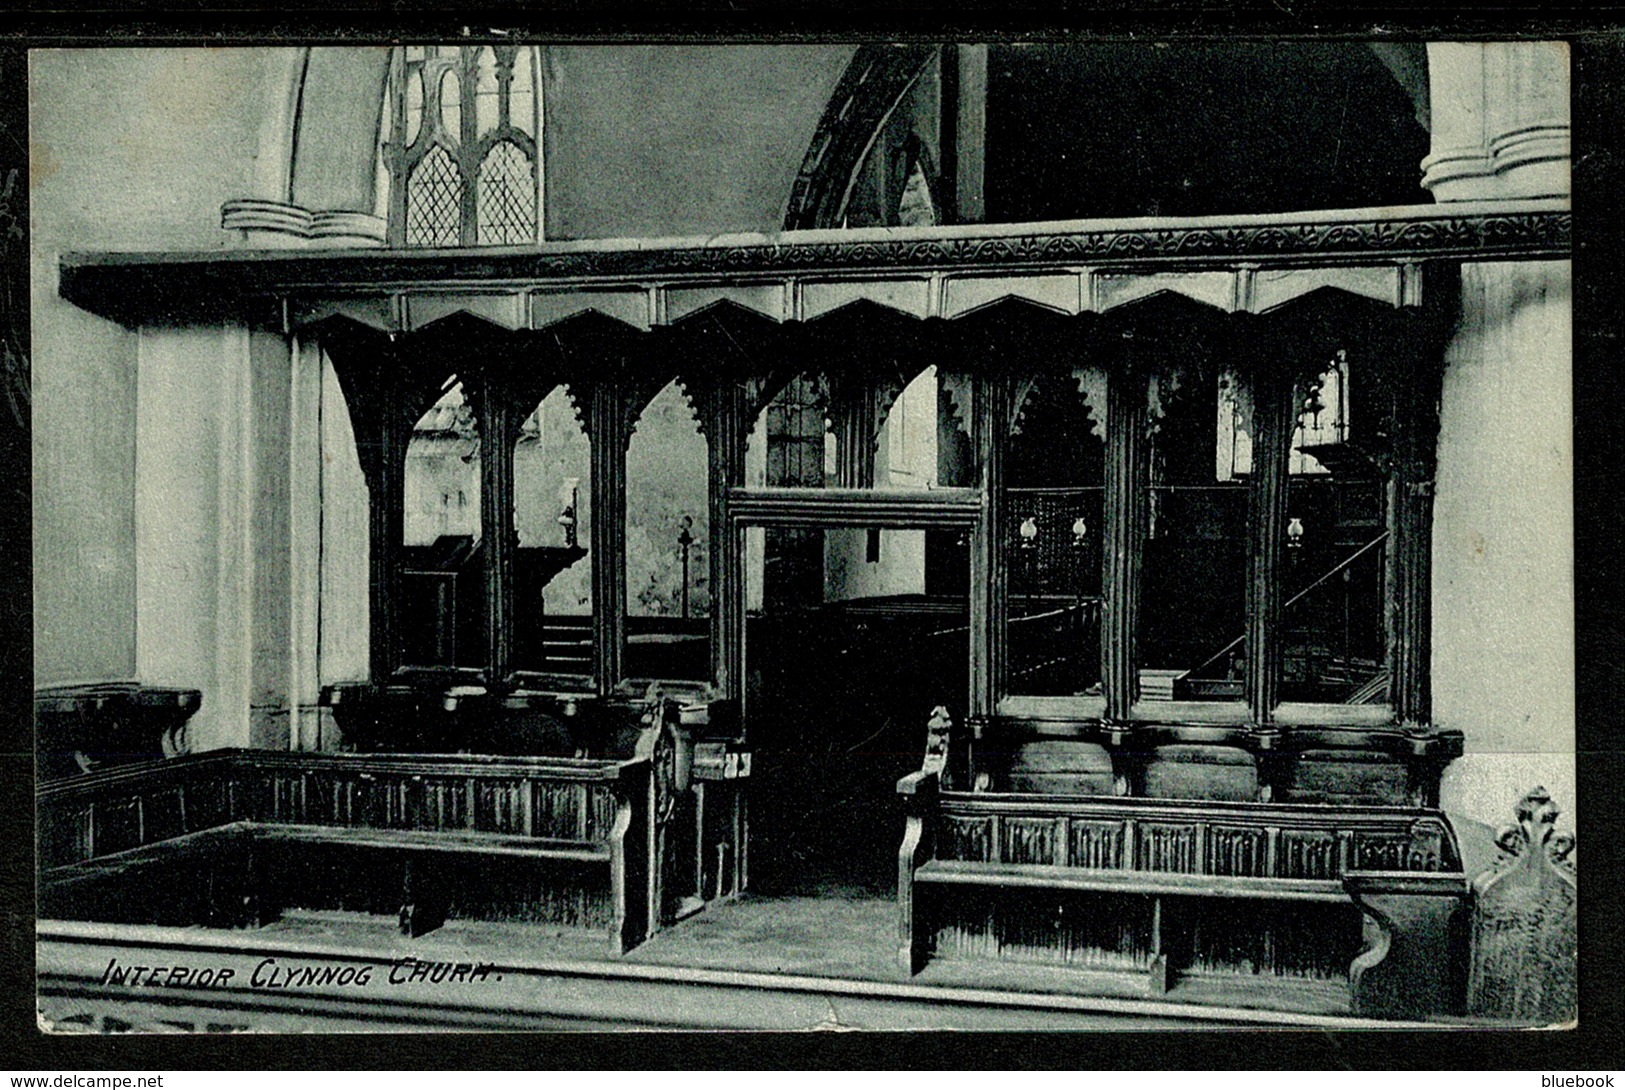 Ref 1321 - Early Postcard - Interior Clynnog Church - Caernarvonshire Wales - Caernarvonshire